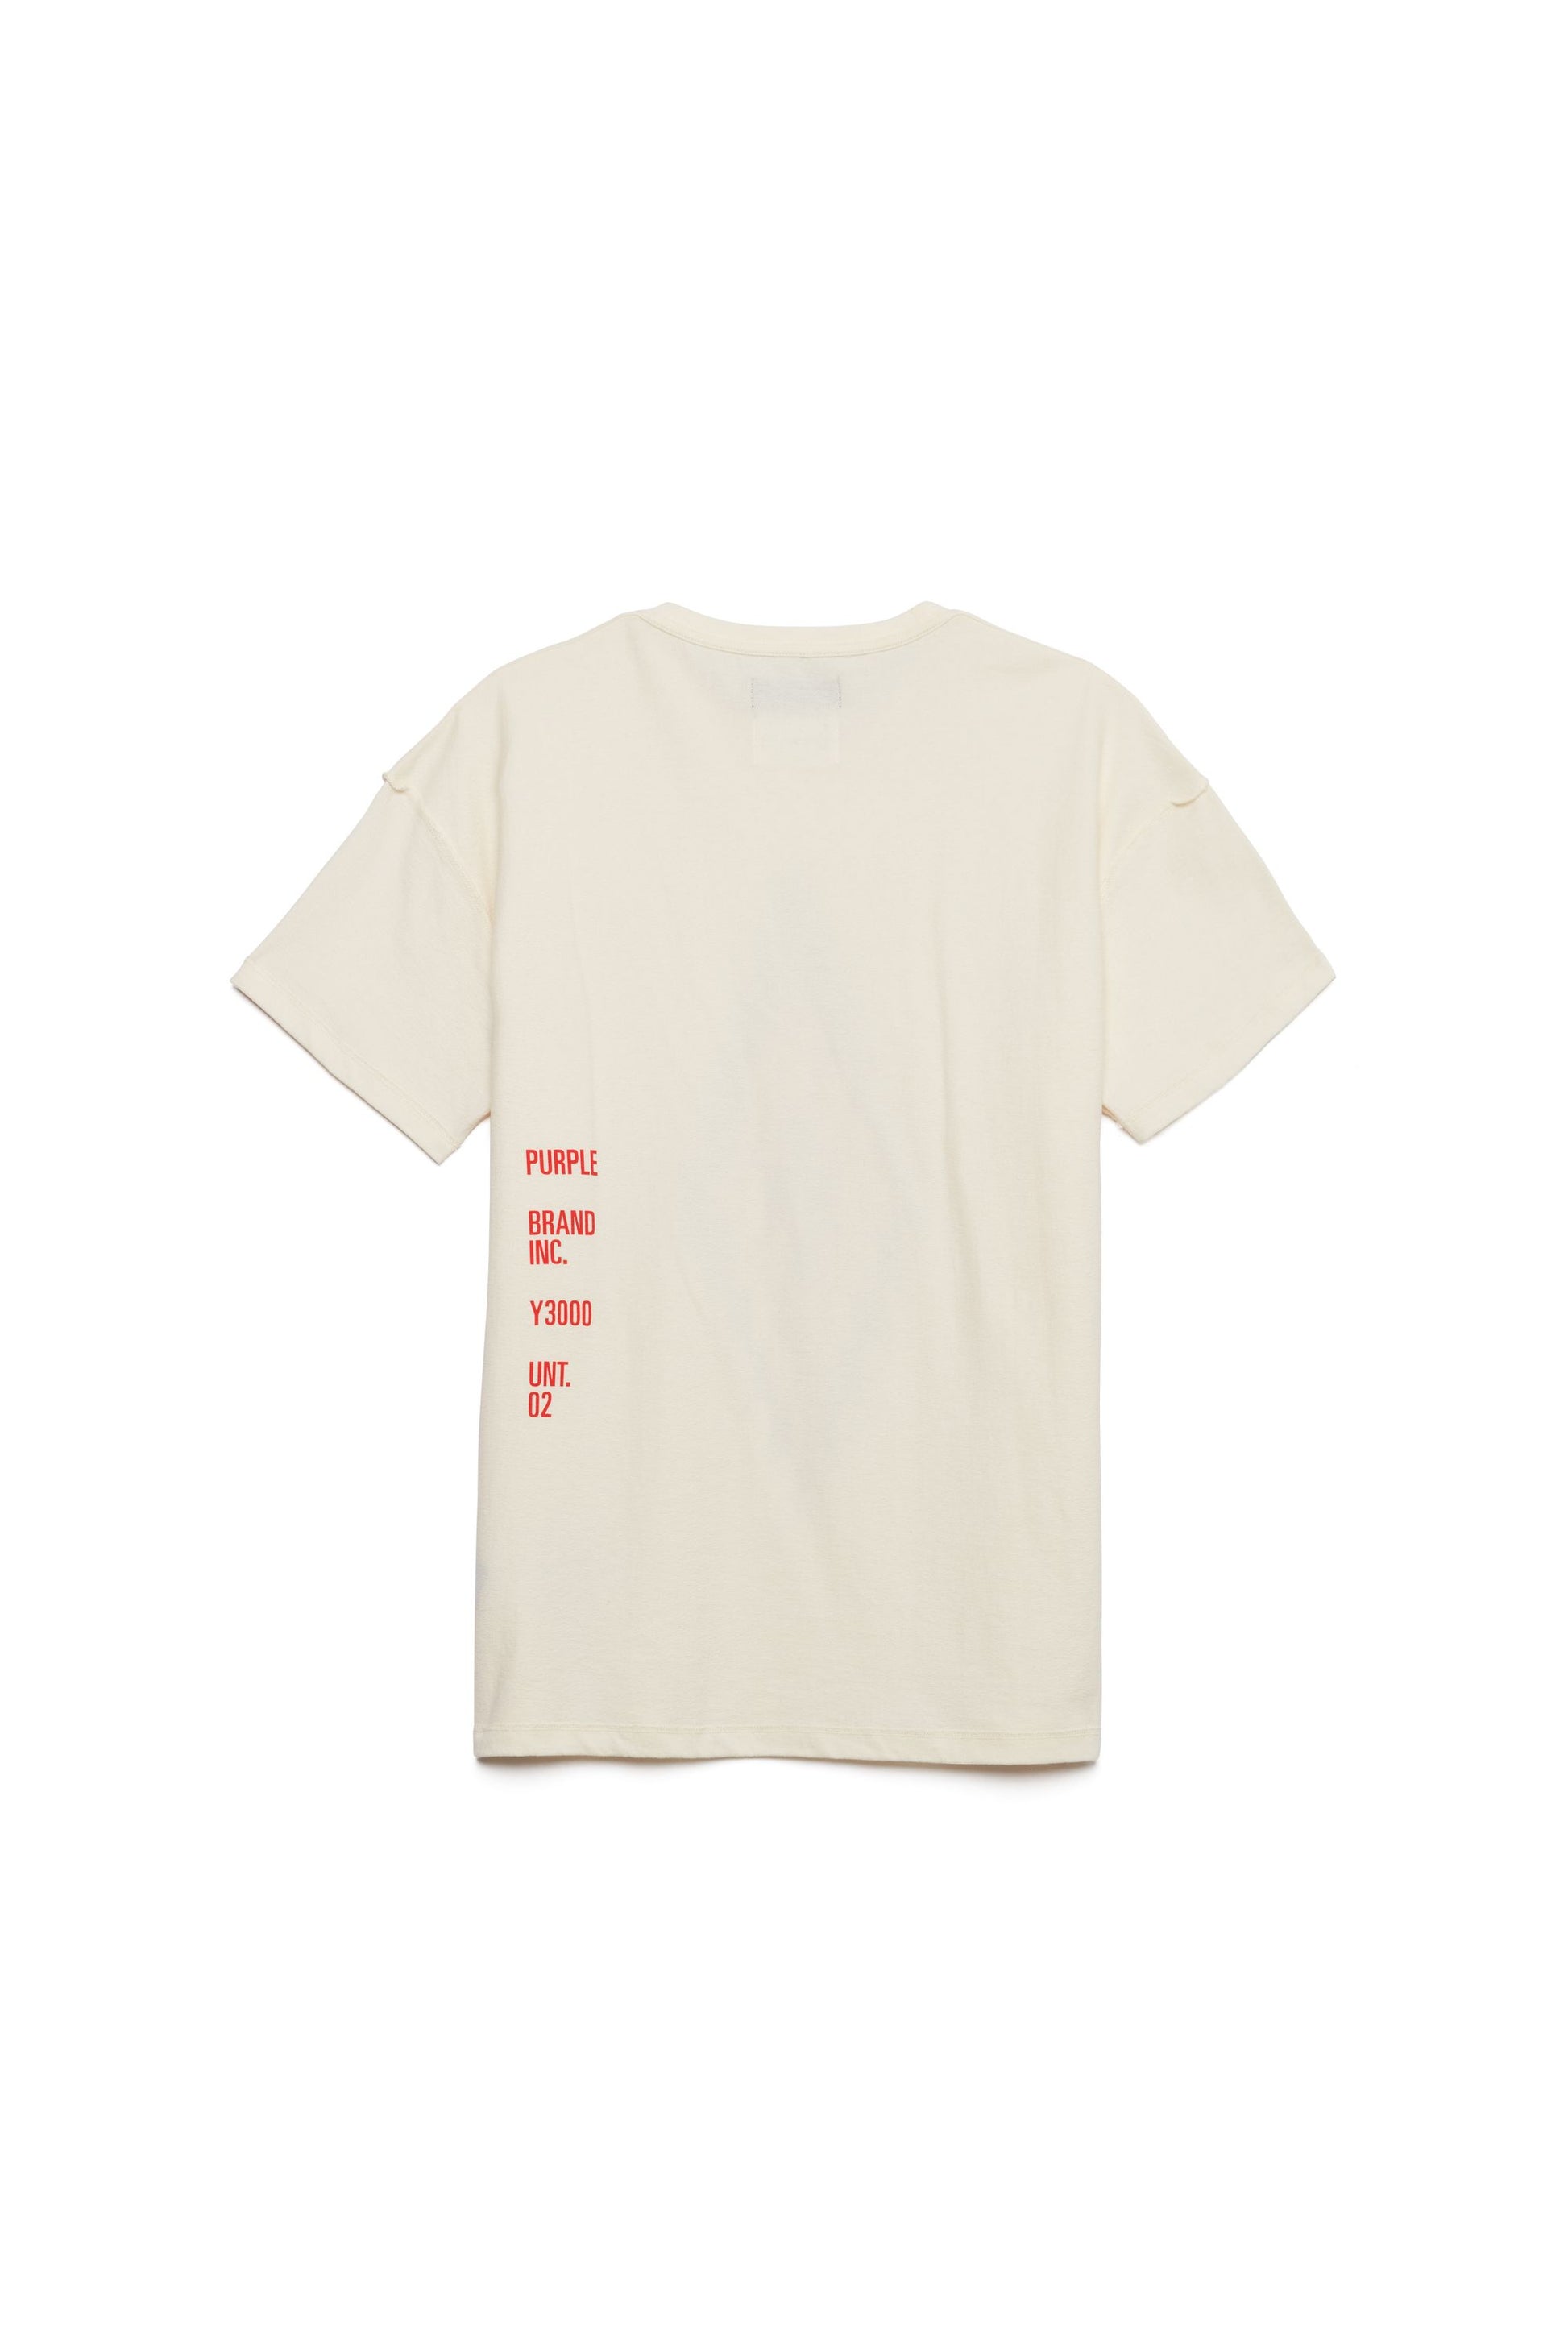 PURPLE BRAND - Men's Relaxed Fit T-Shirt - Style No. P101 - Artifact Ecru - Back